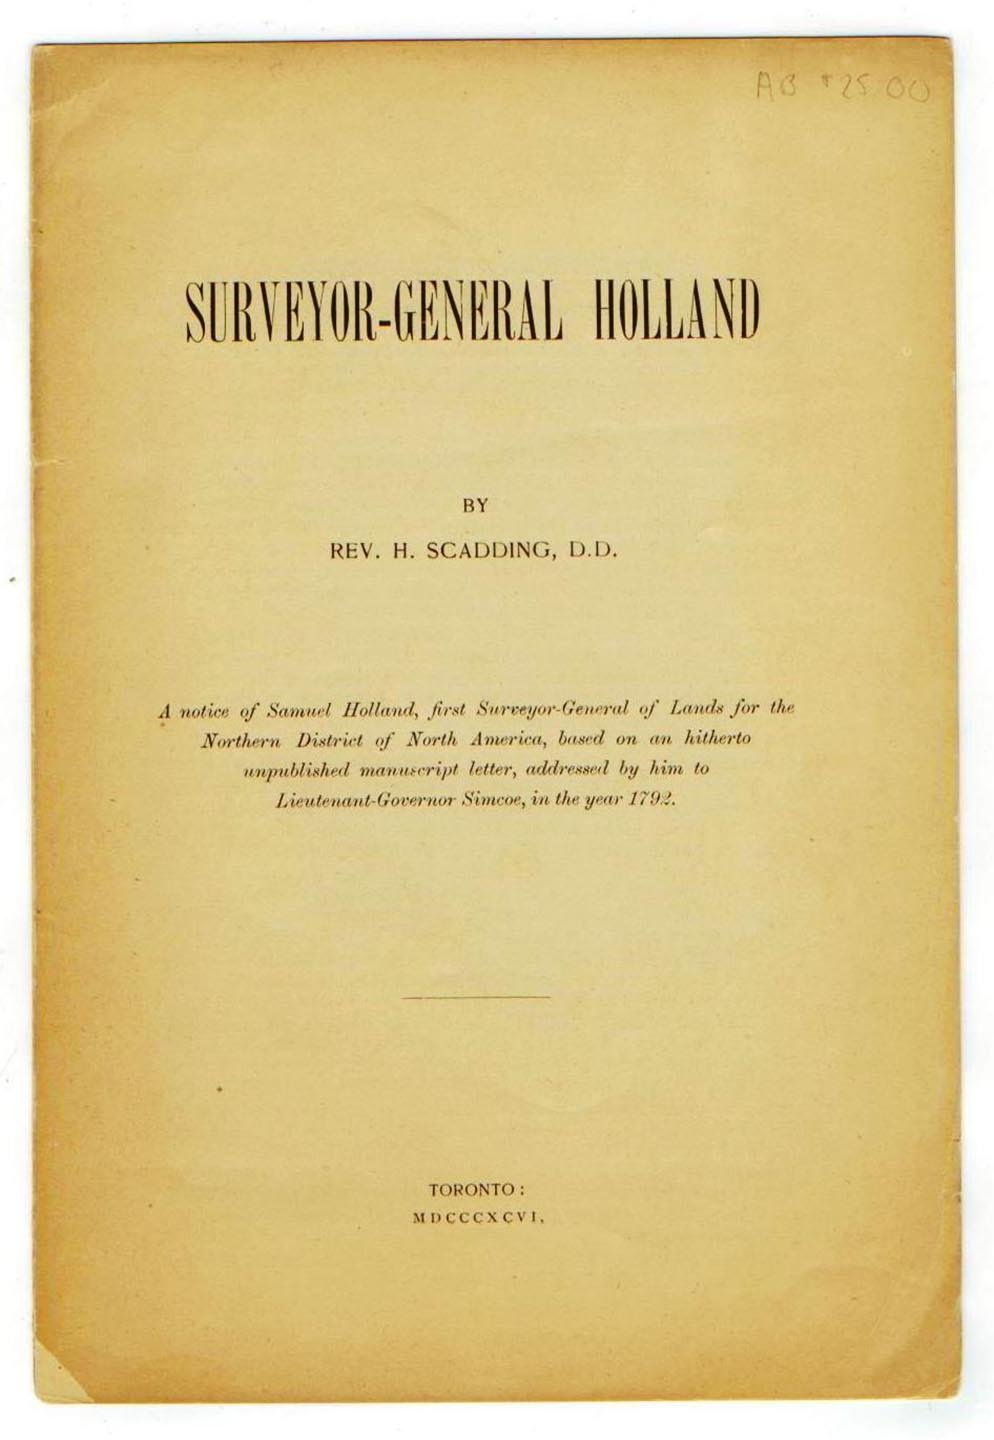 Surveyor-General Holland